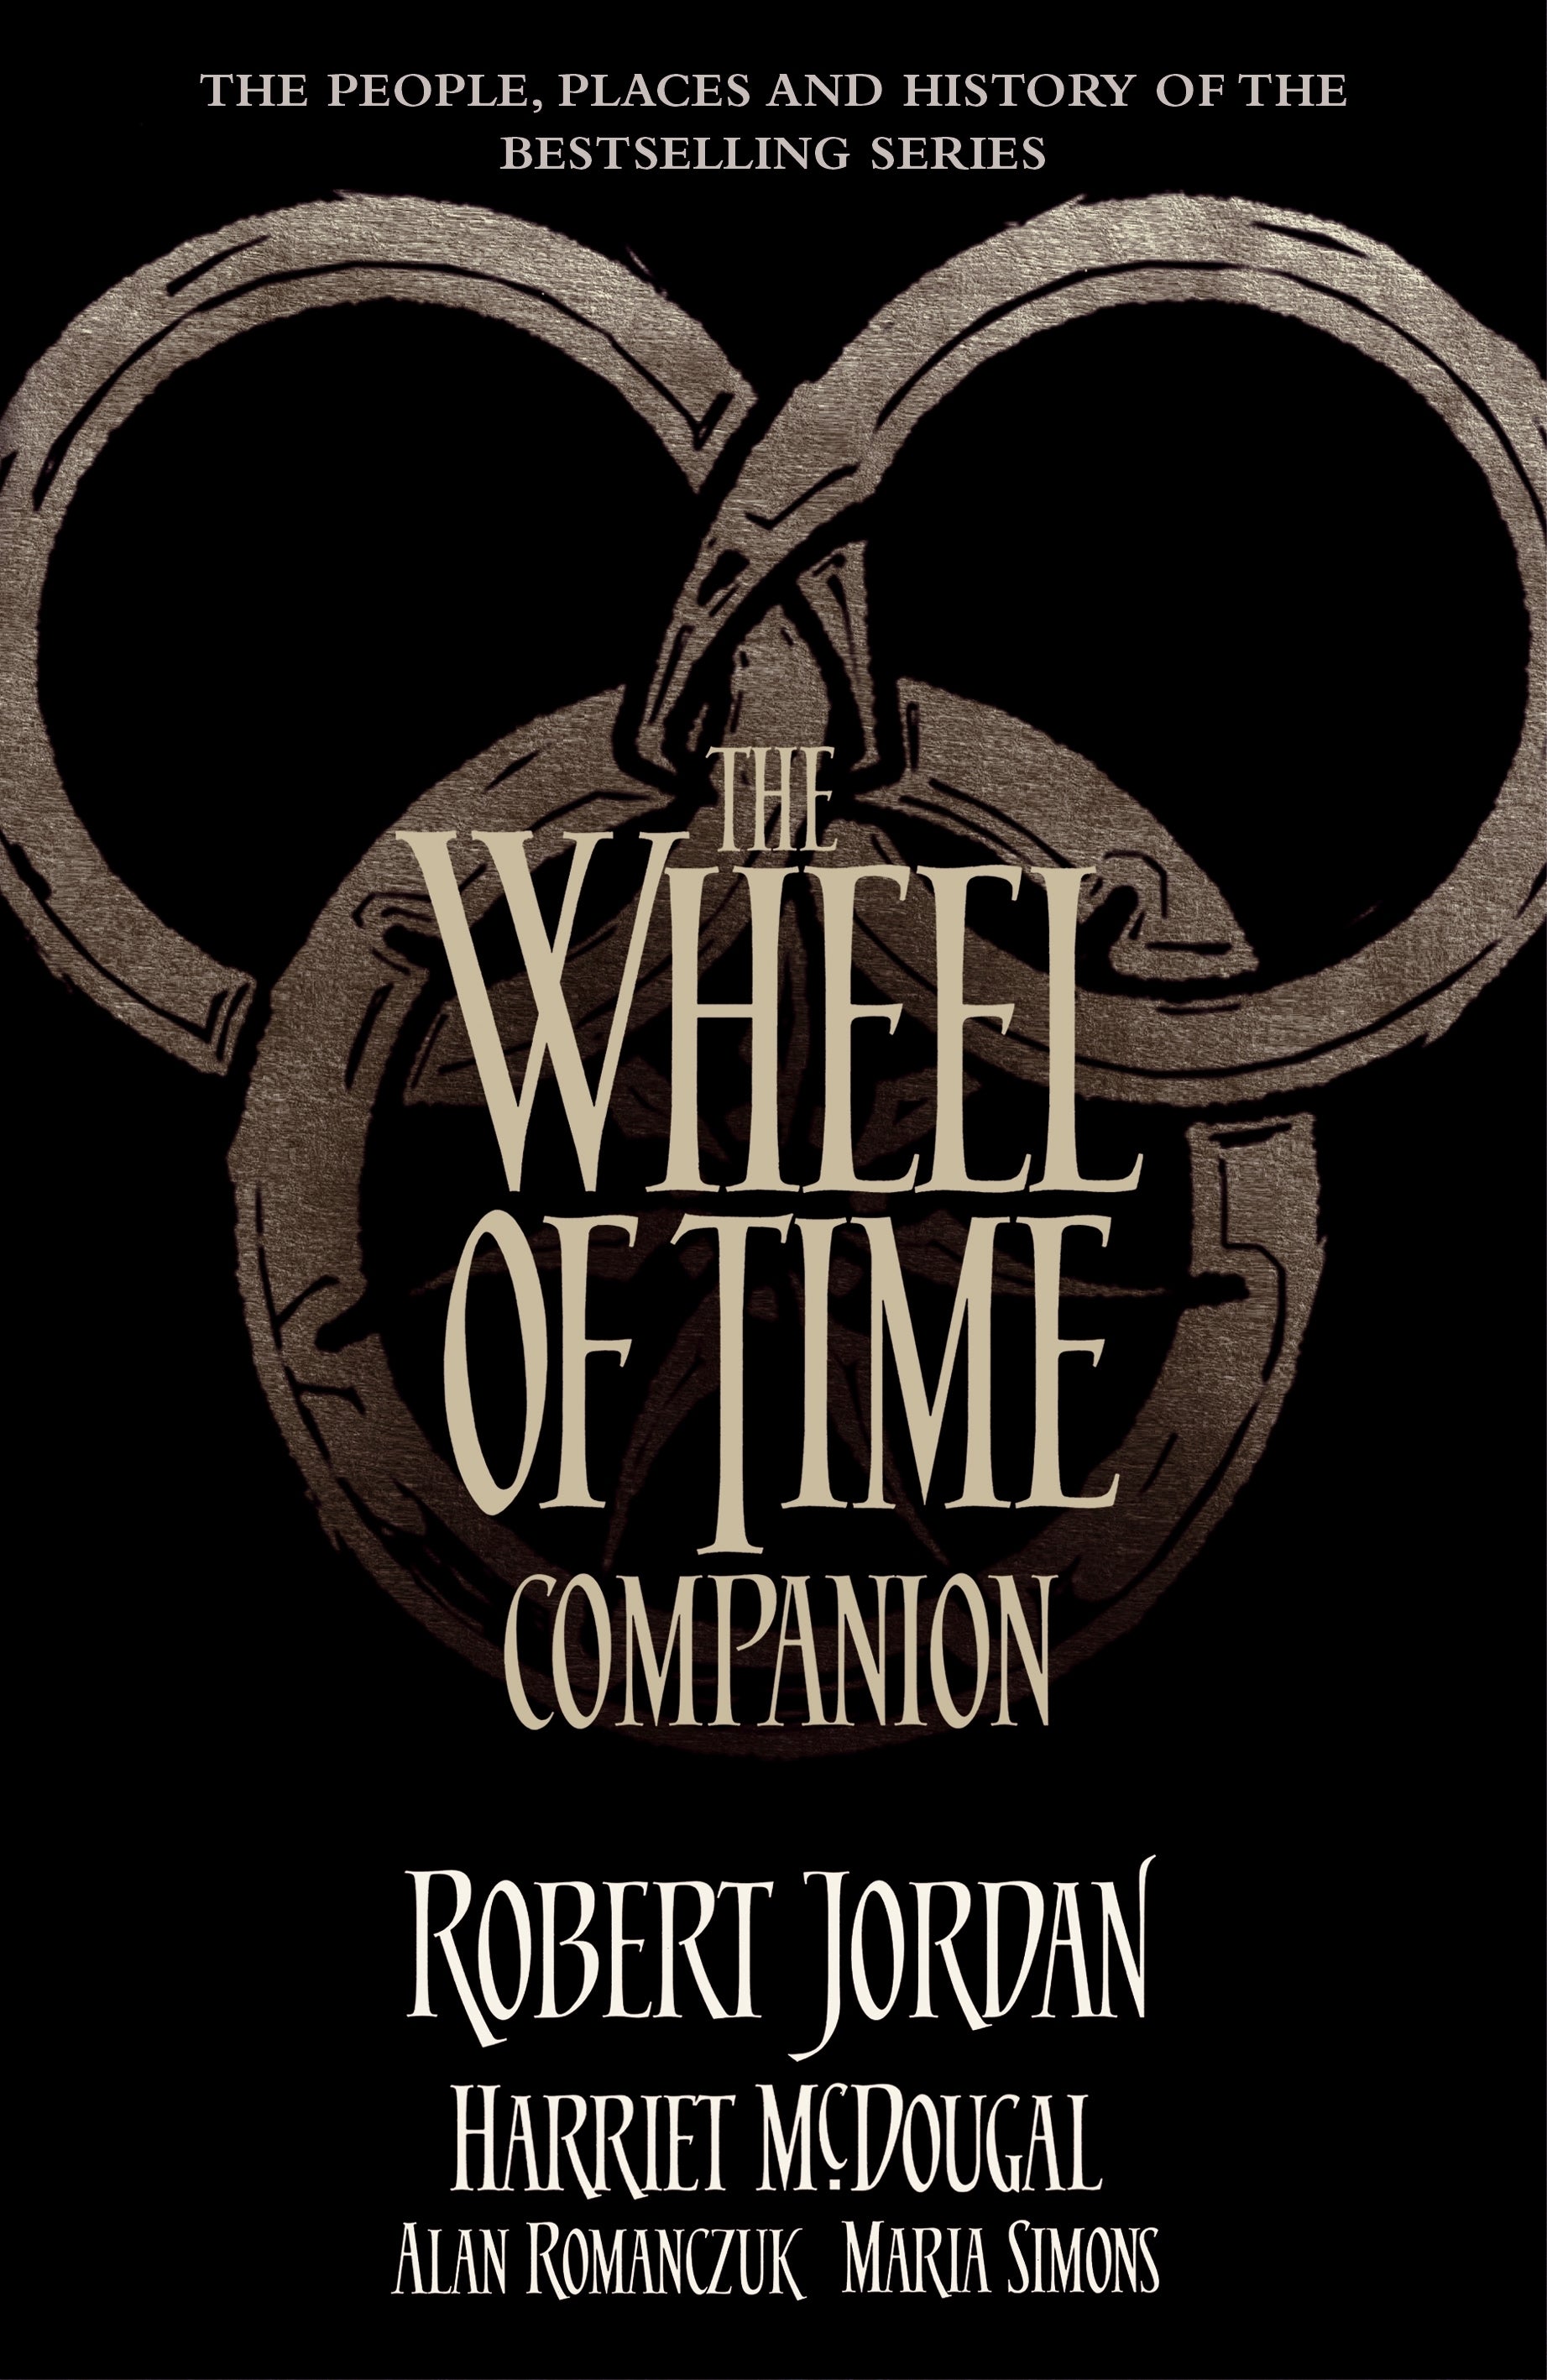 The Wheel of Time Companion by Robert Jordan, Harriet McDougal, Alan Romanczuk, Maria Simons